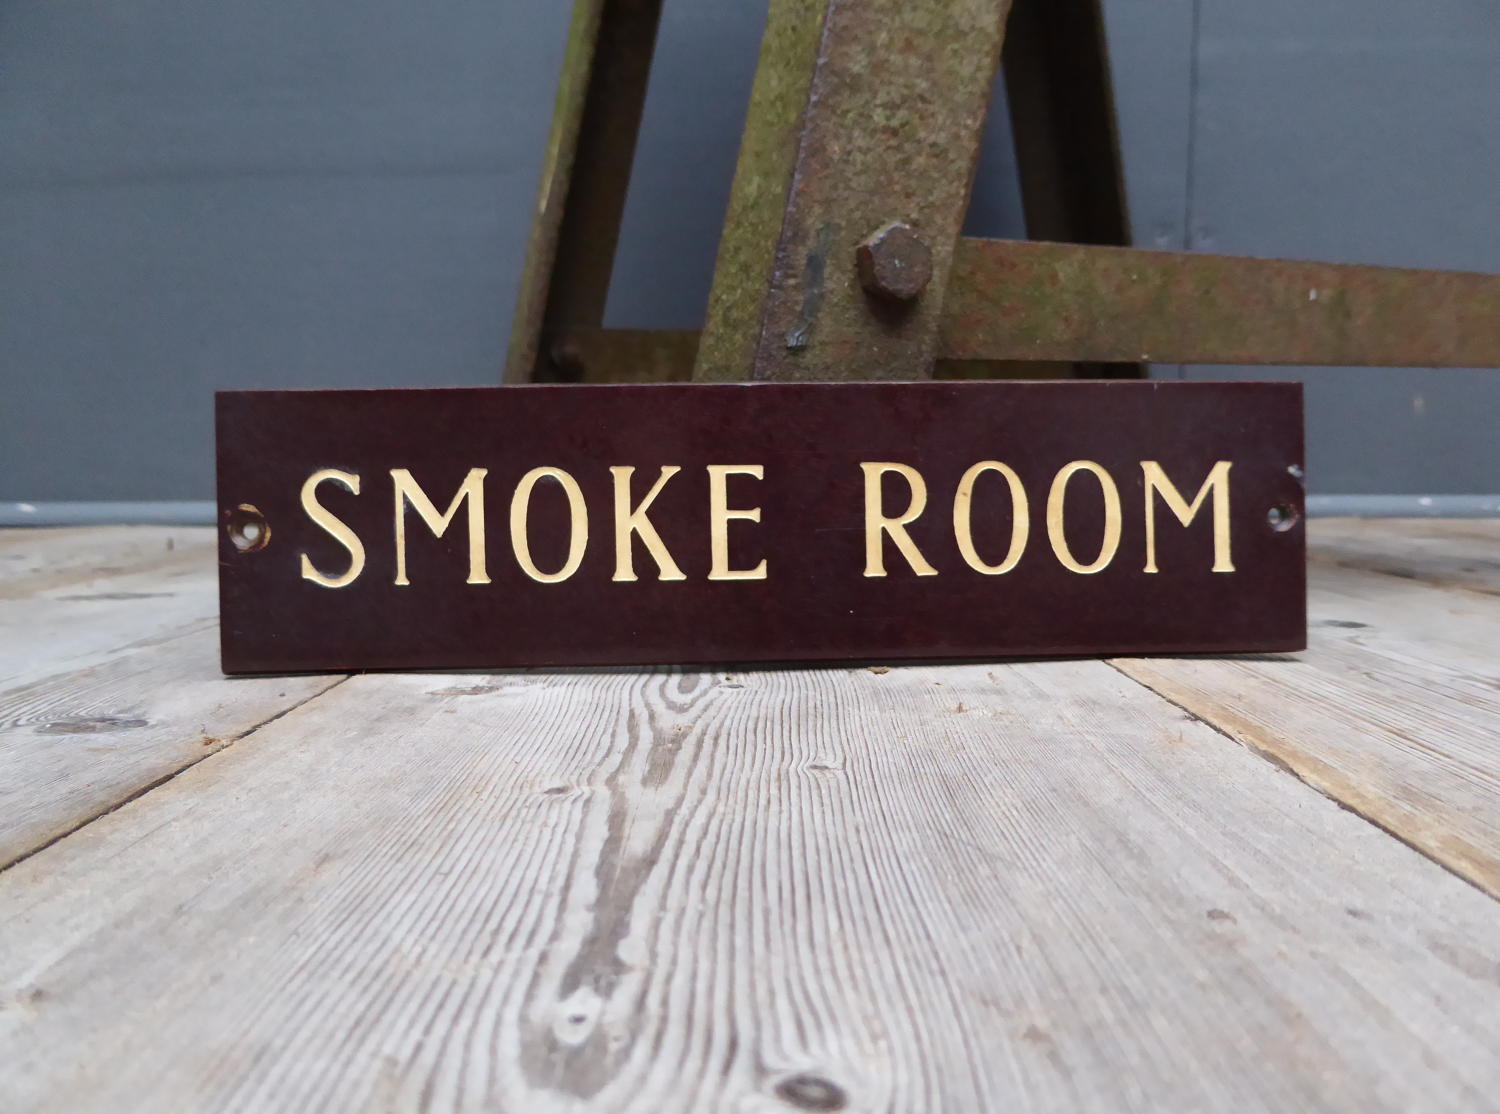 Smoke Room Sign In Bakelite